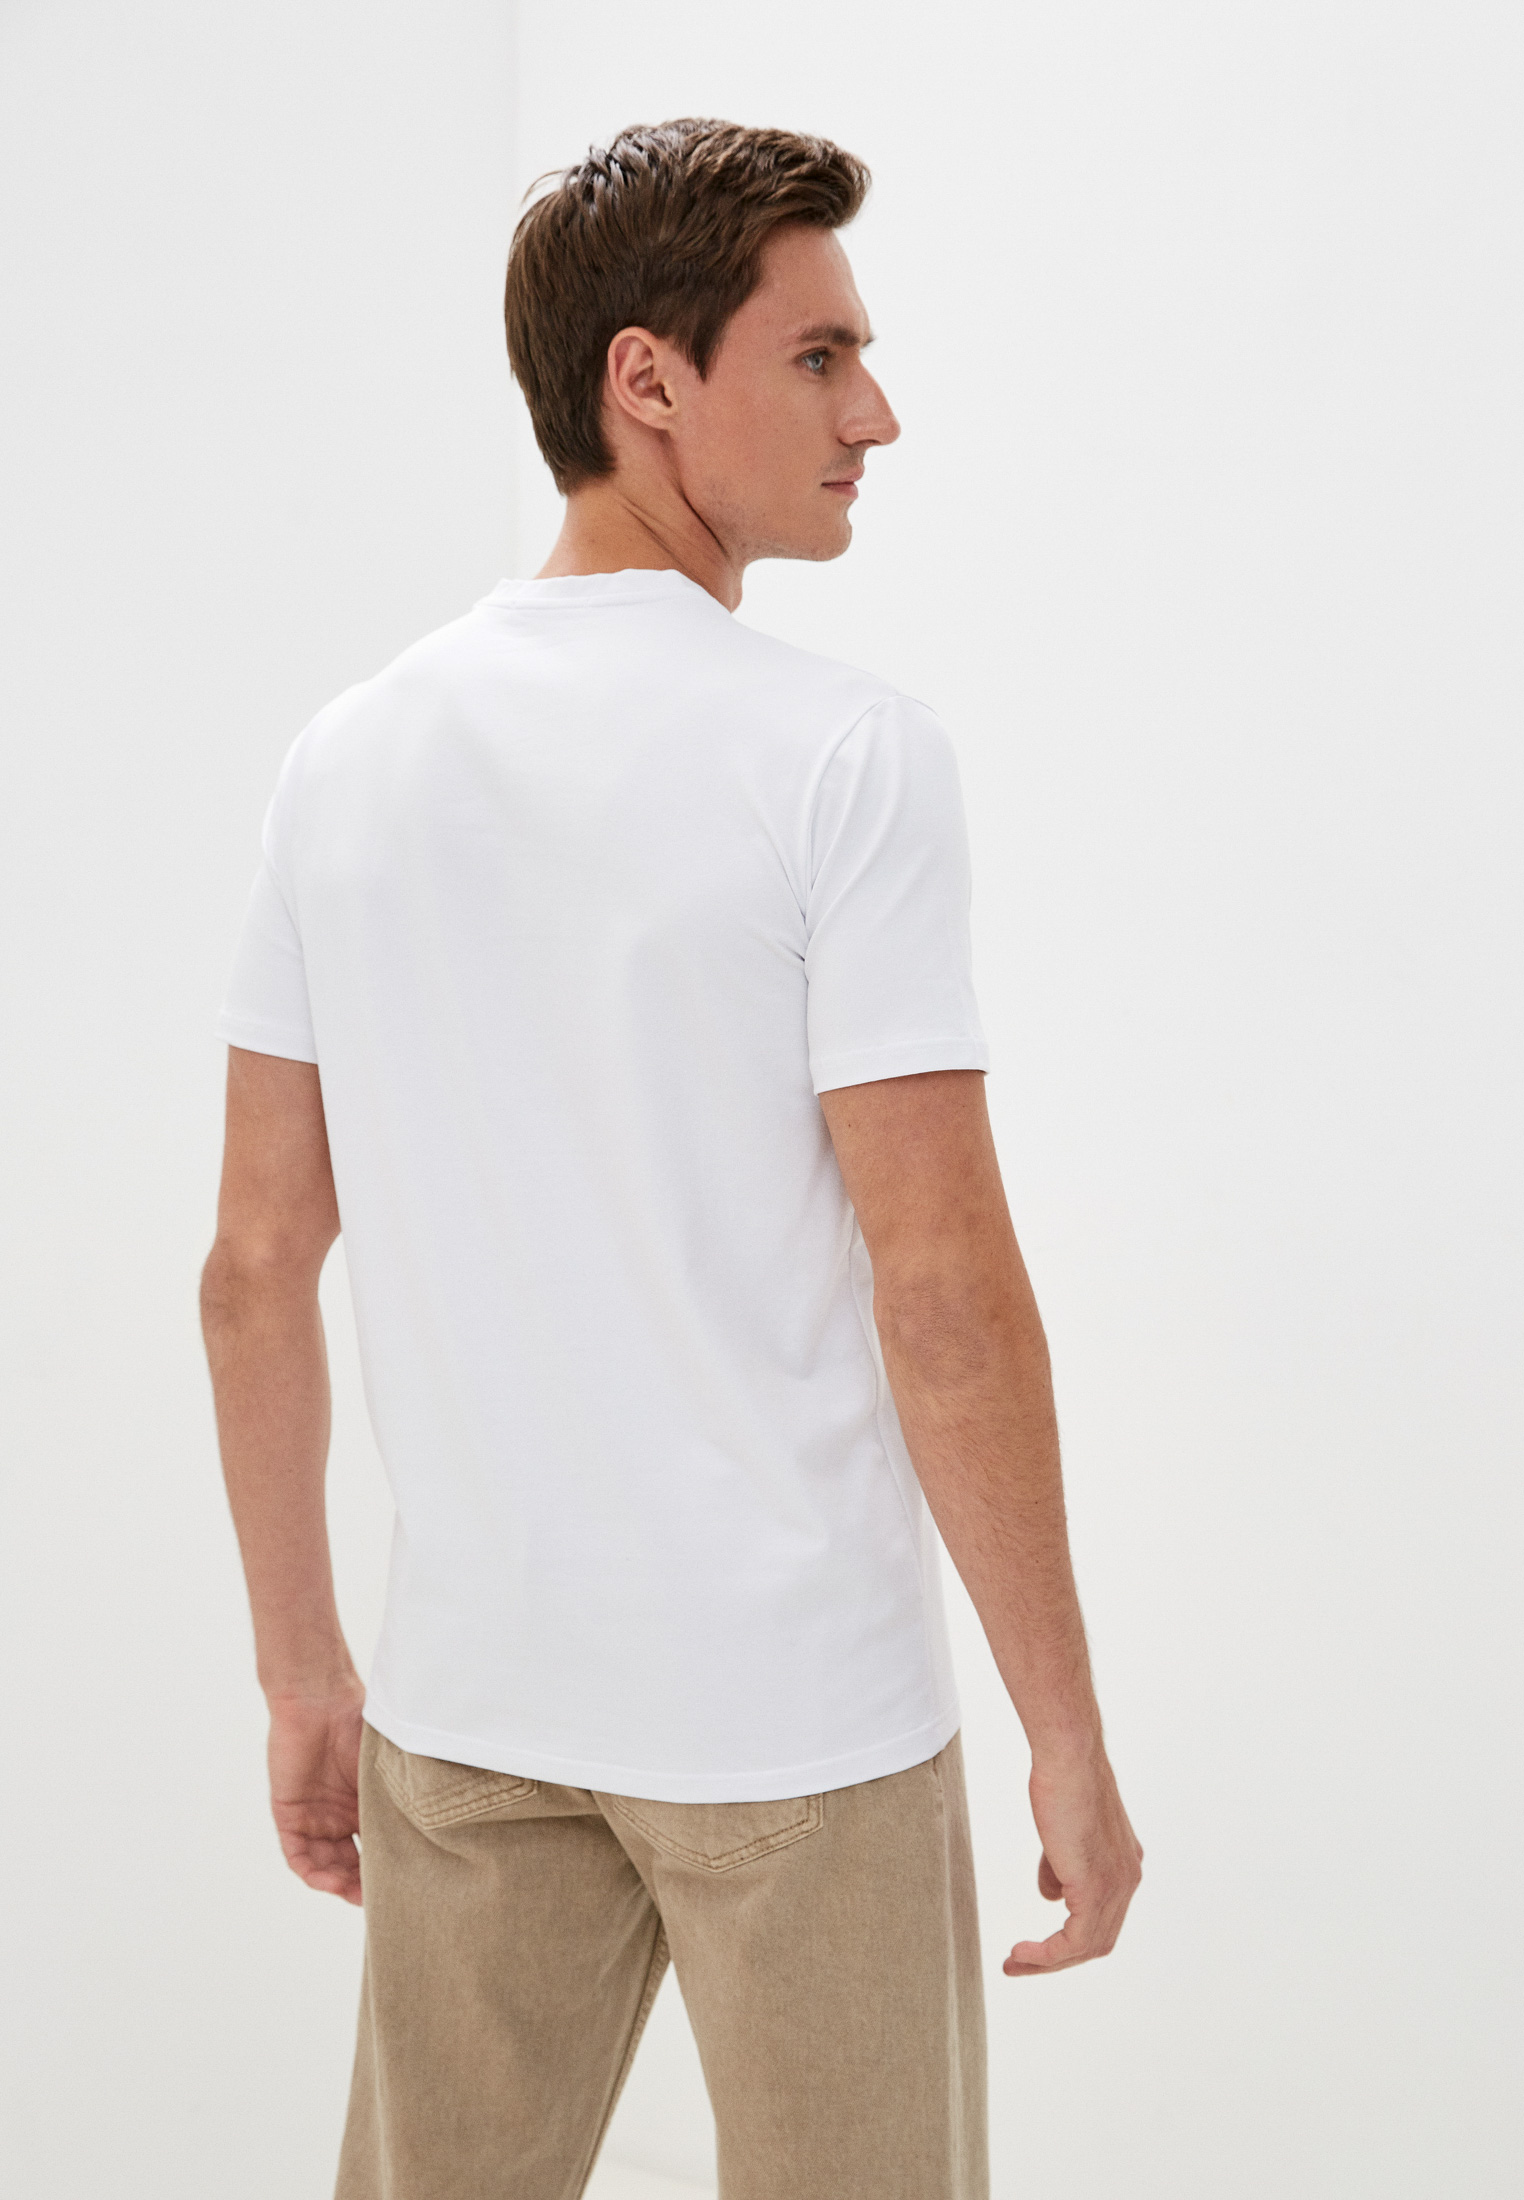 Мужская футболка Baldinini (Балдинини) TSU02: изображение 4